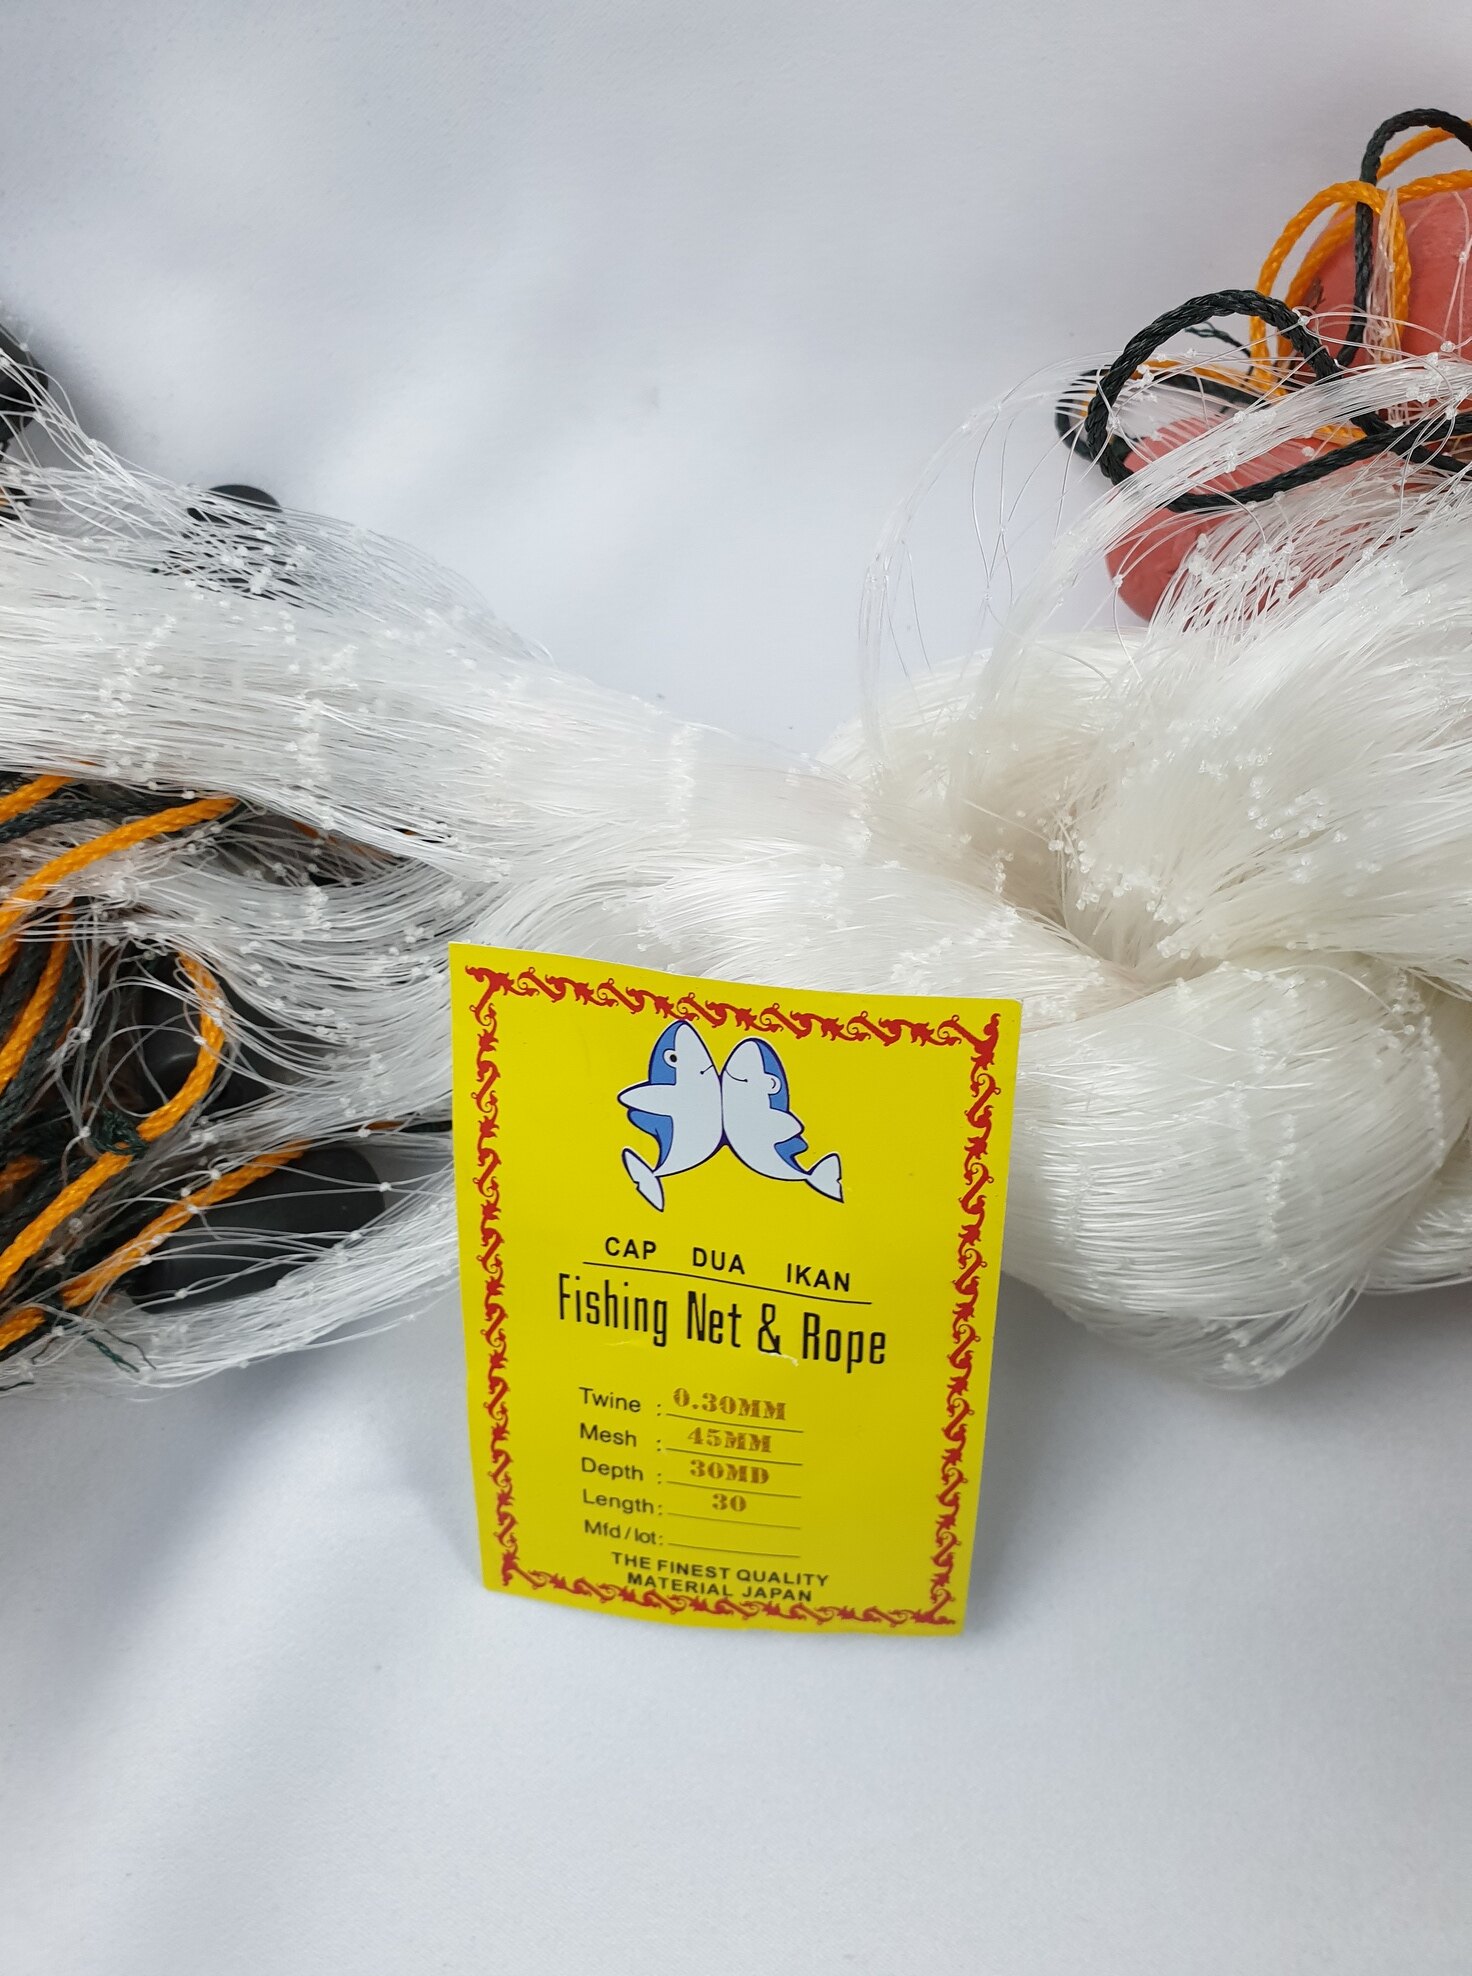 SABAH STYLE PUKAT HANYUT CGN 300FT B,Jaring Pukat Ikan Tangsi siap,Fishing  Nylon Net With Rope & Float,COMPLETE GILL NET